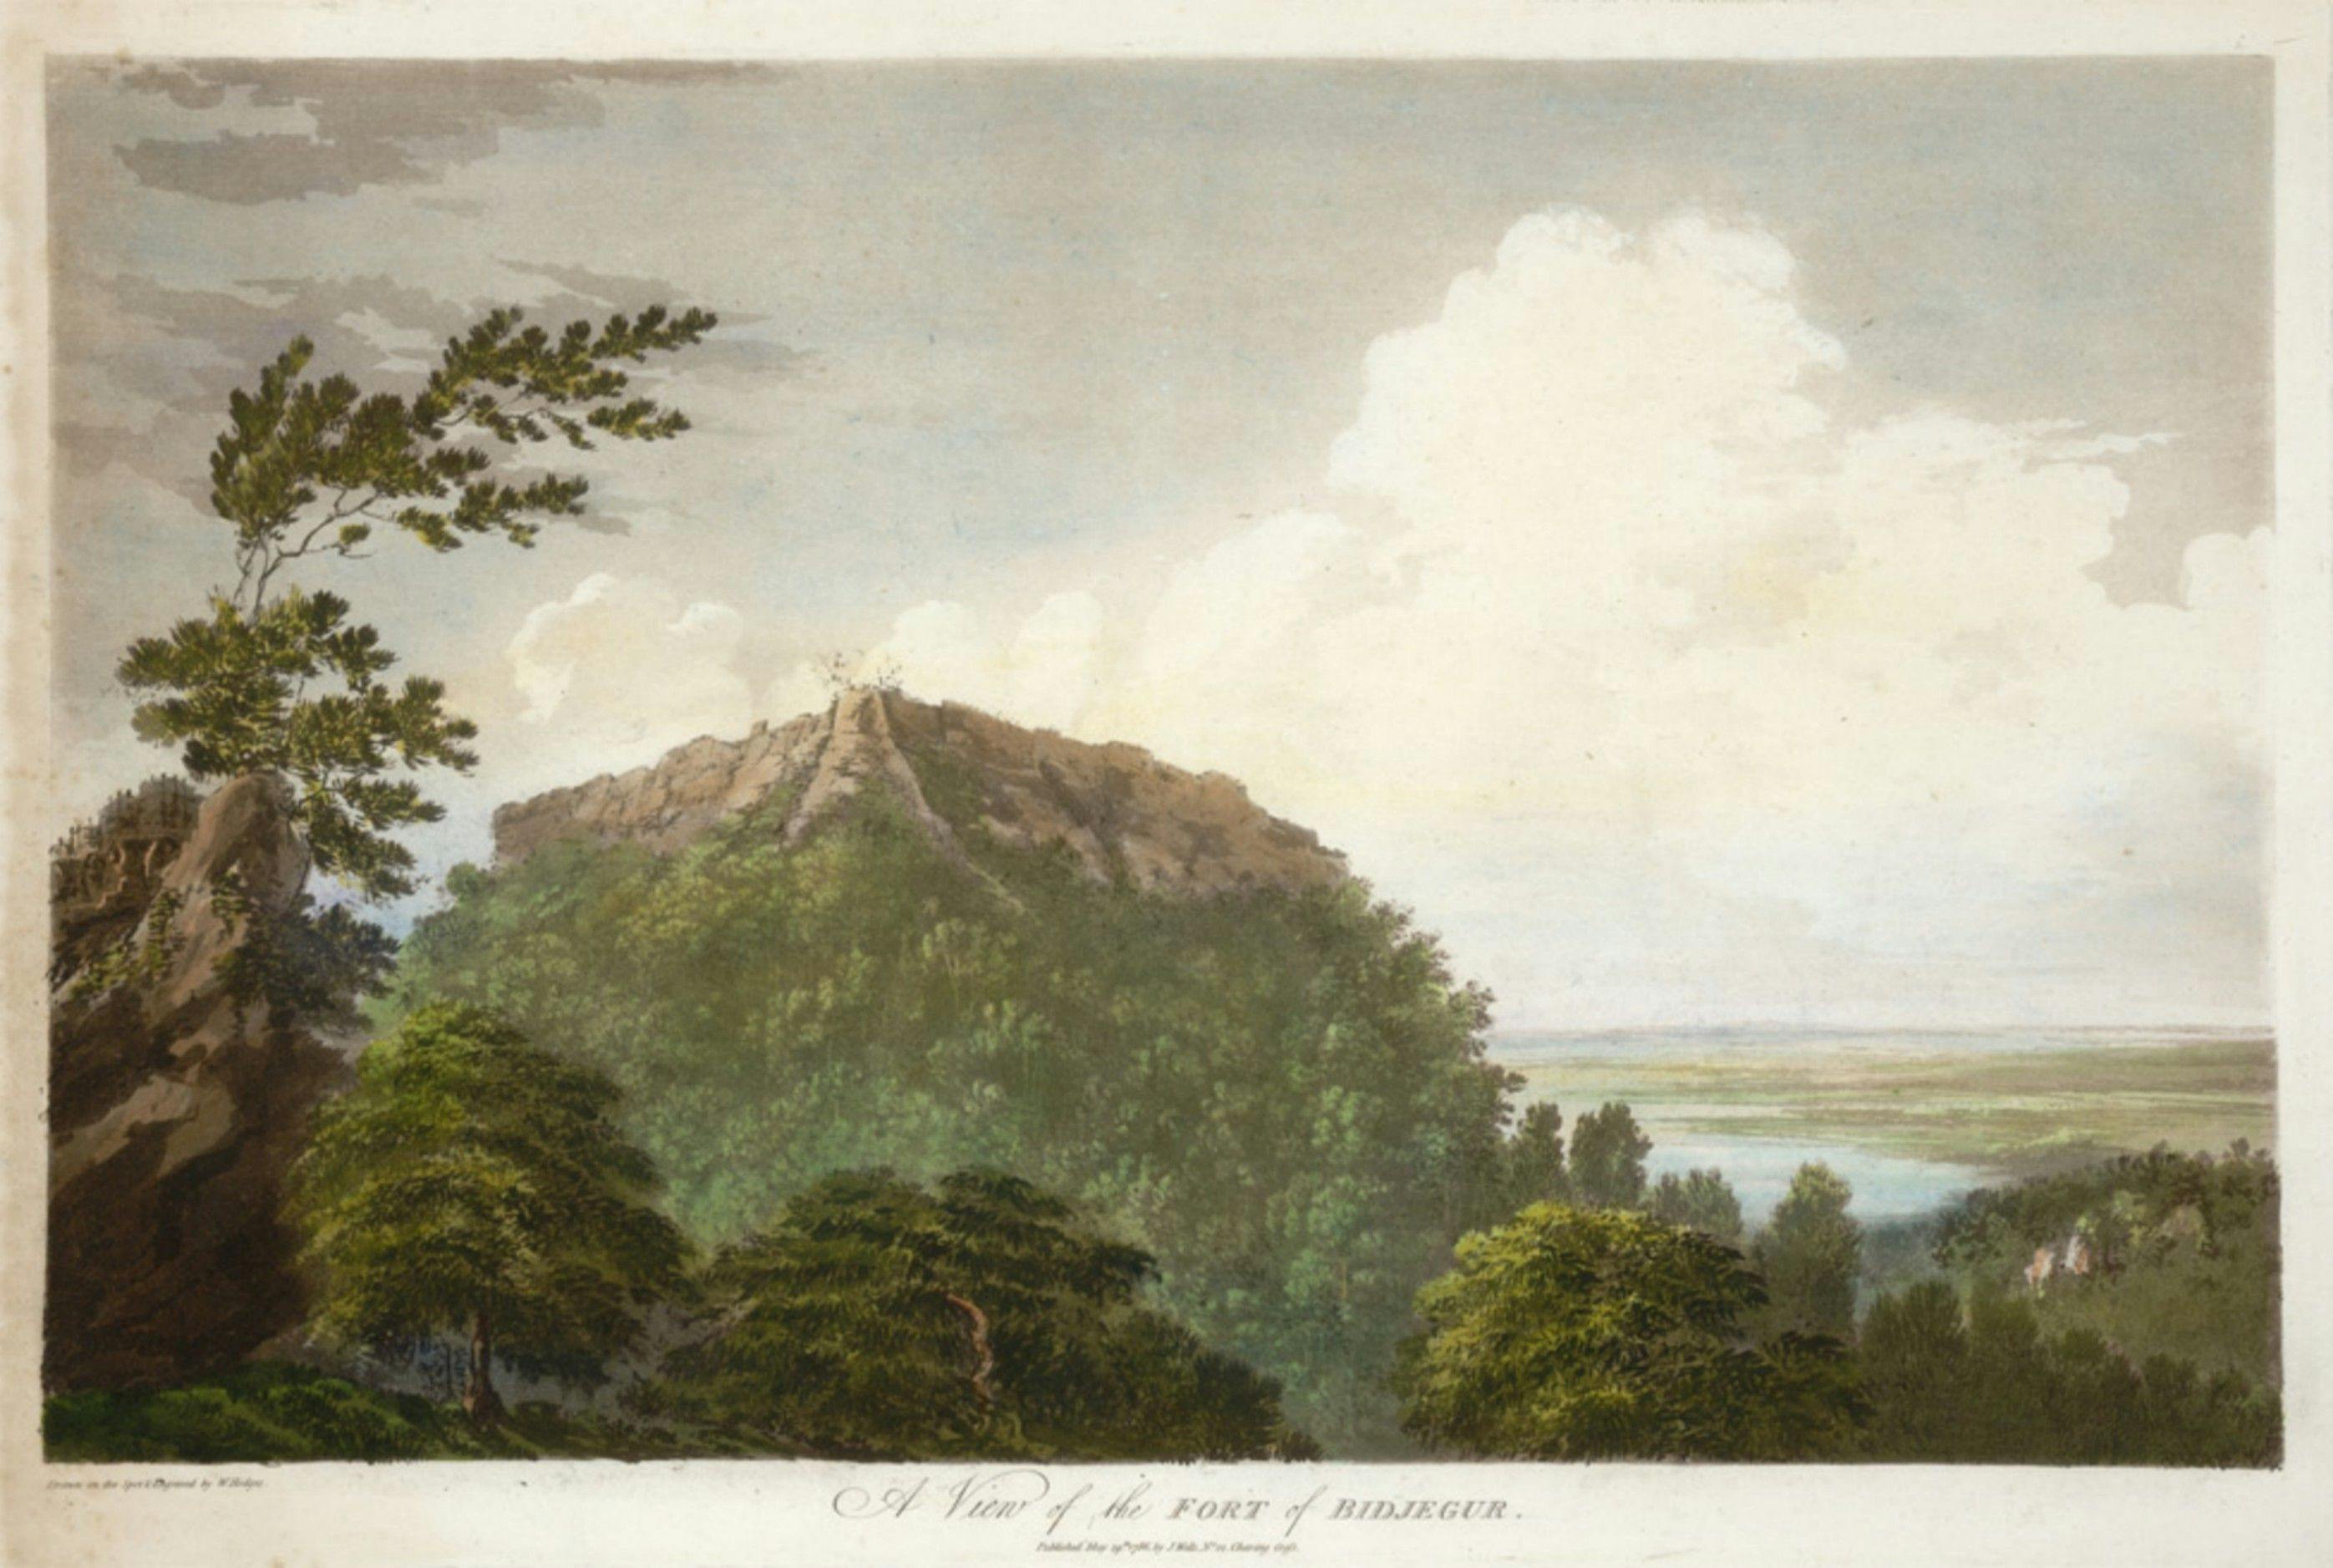 View of the Fort of Bidjegur (Vijaygarh) by William Hodges, 1787